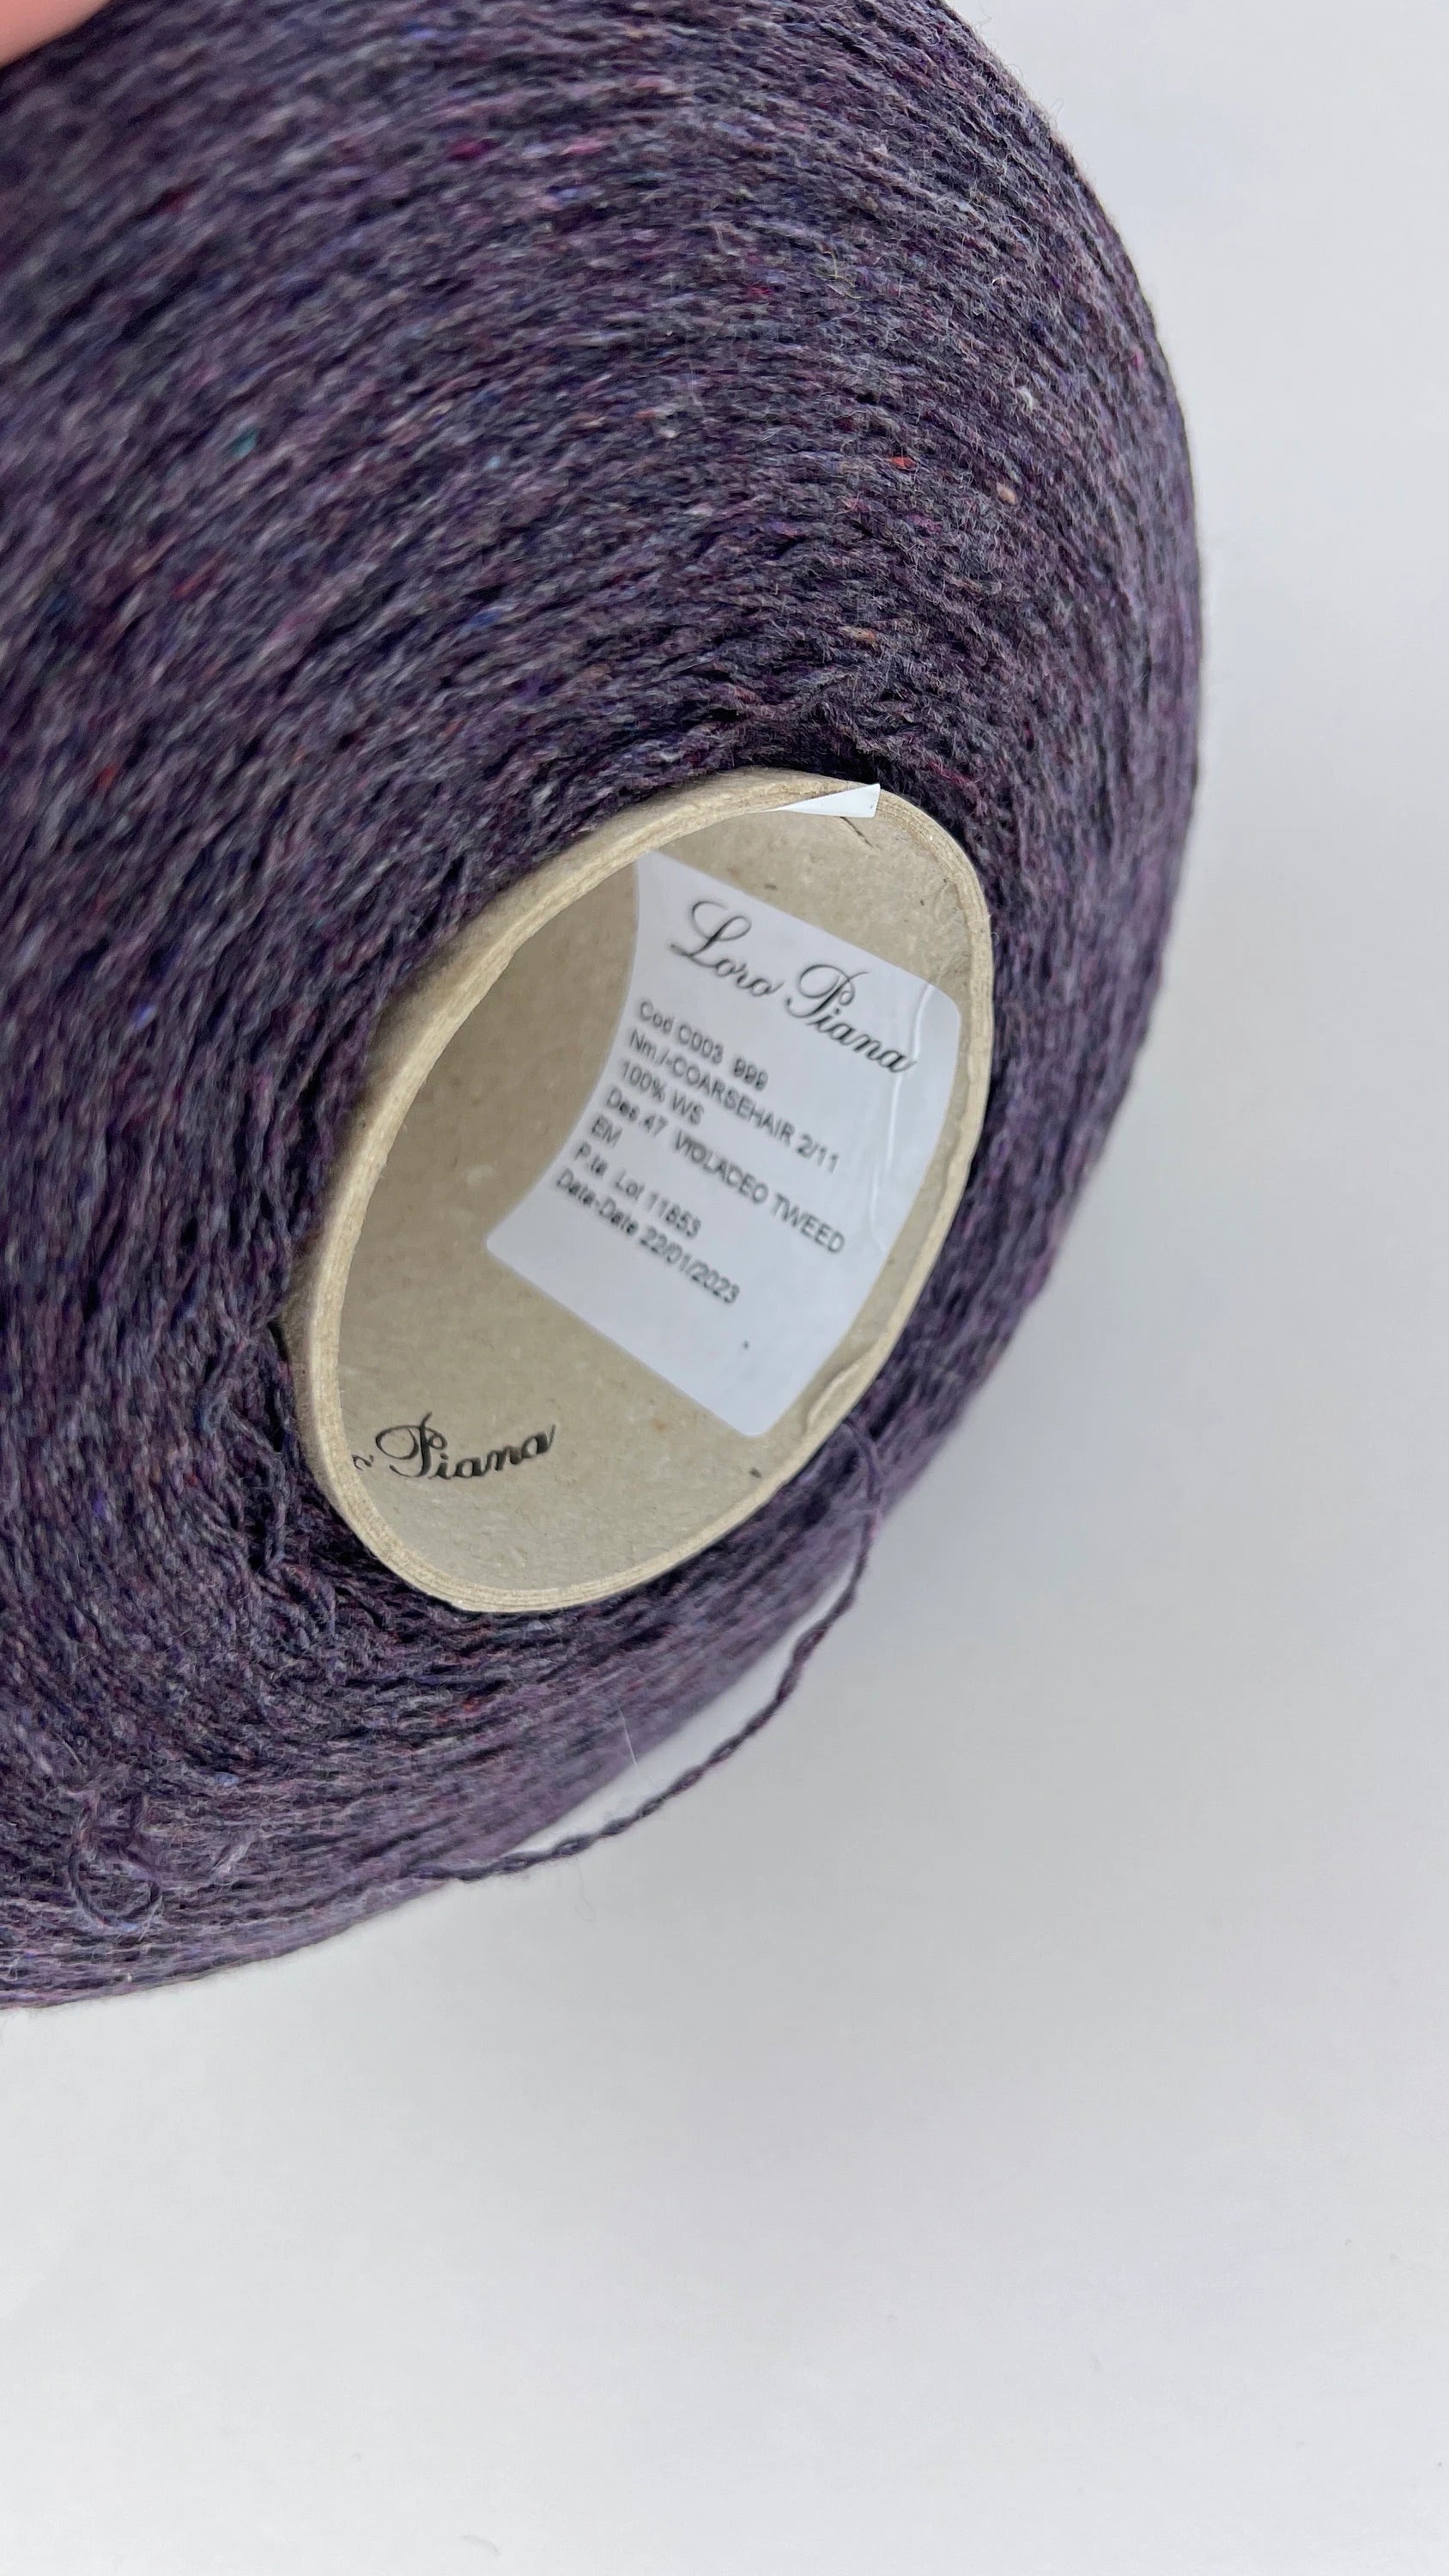 100% Cashmere Coarsehair Yarn - Loro Piana-C003 999, Violaceo Tweed, per  100 gr